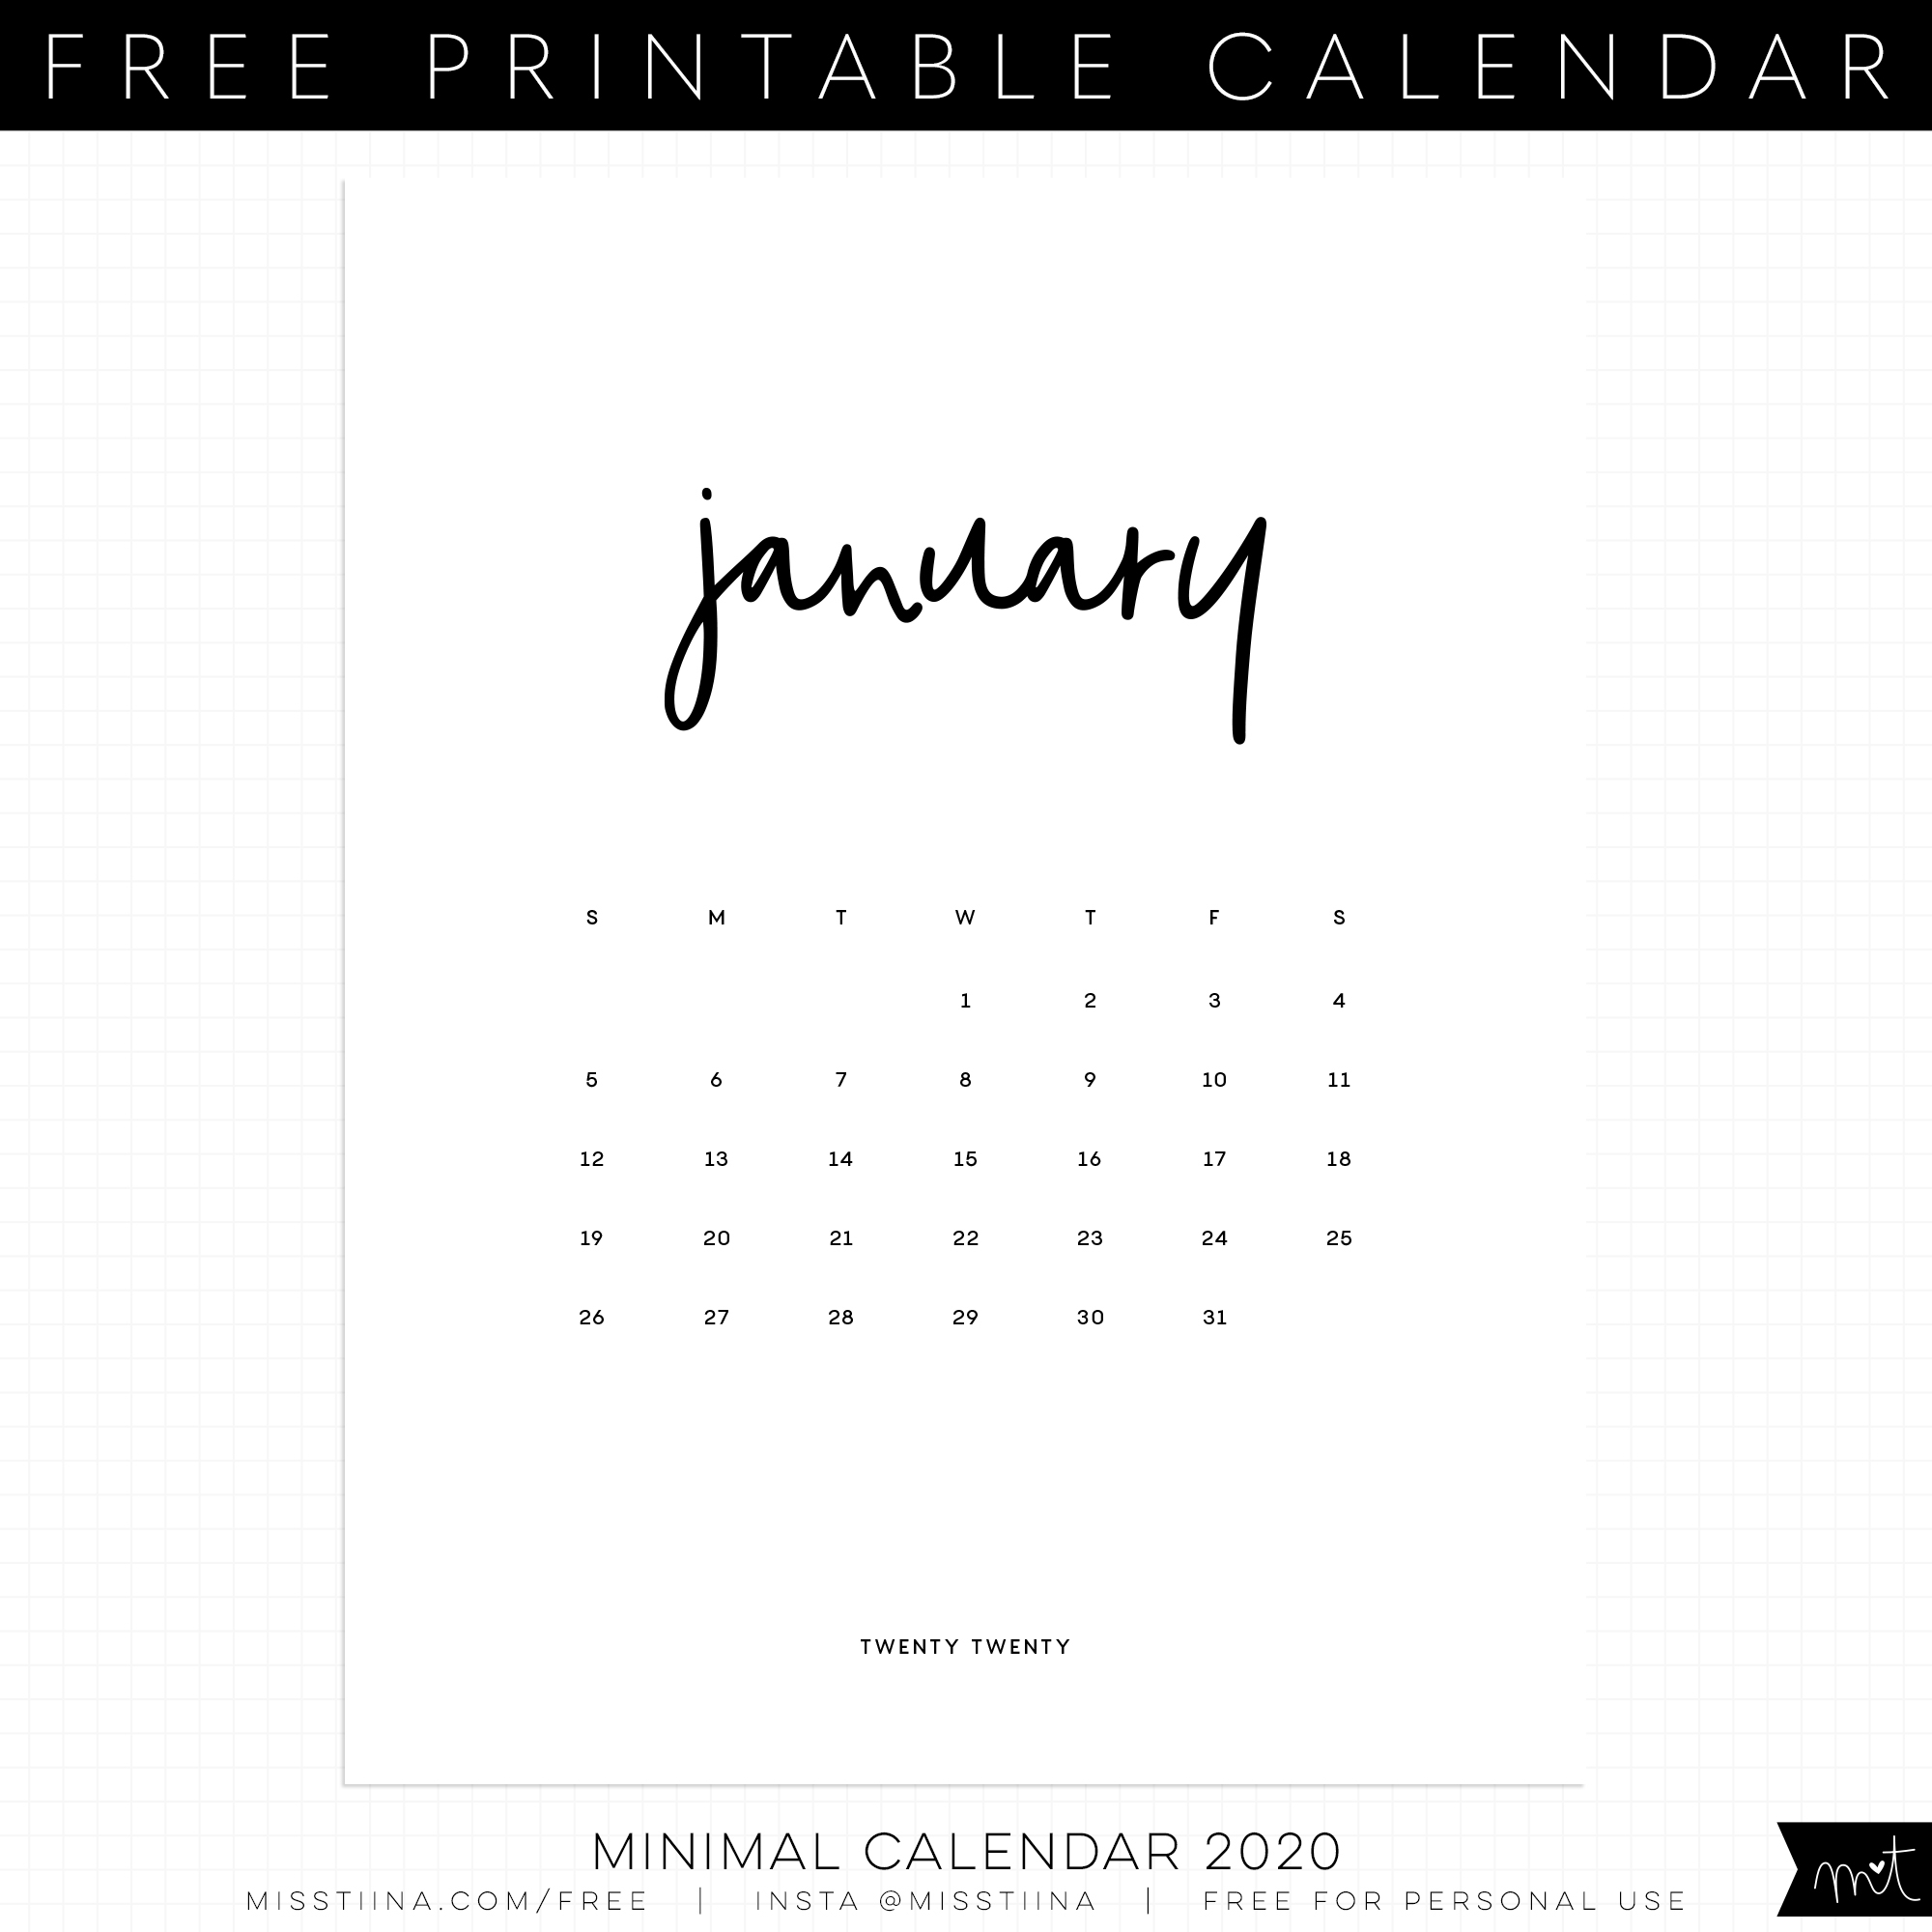 Free Calendar Printables | Misstiina within Minimal Calendar January 2020 Printable Monday To Sunday